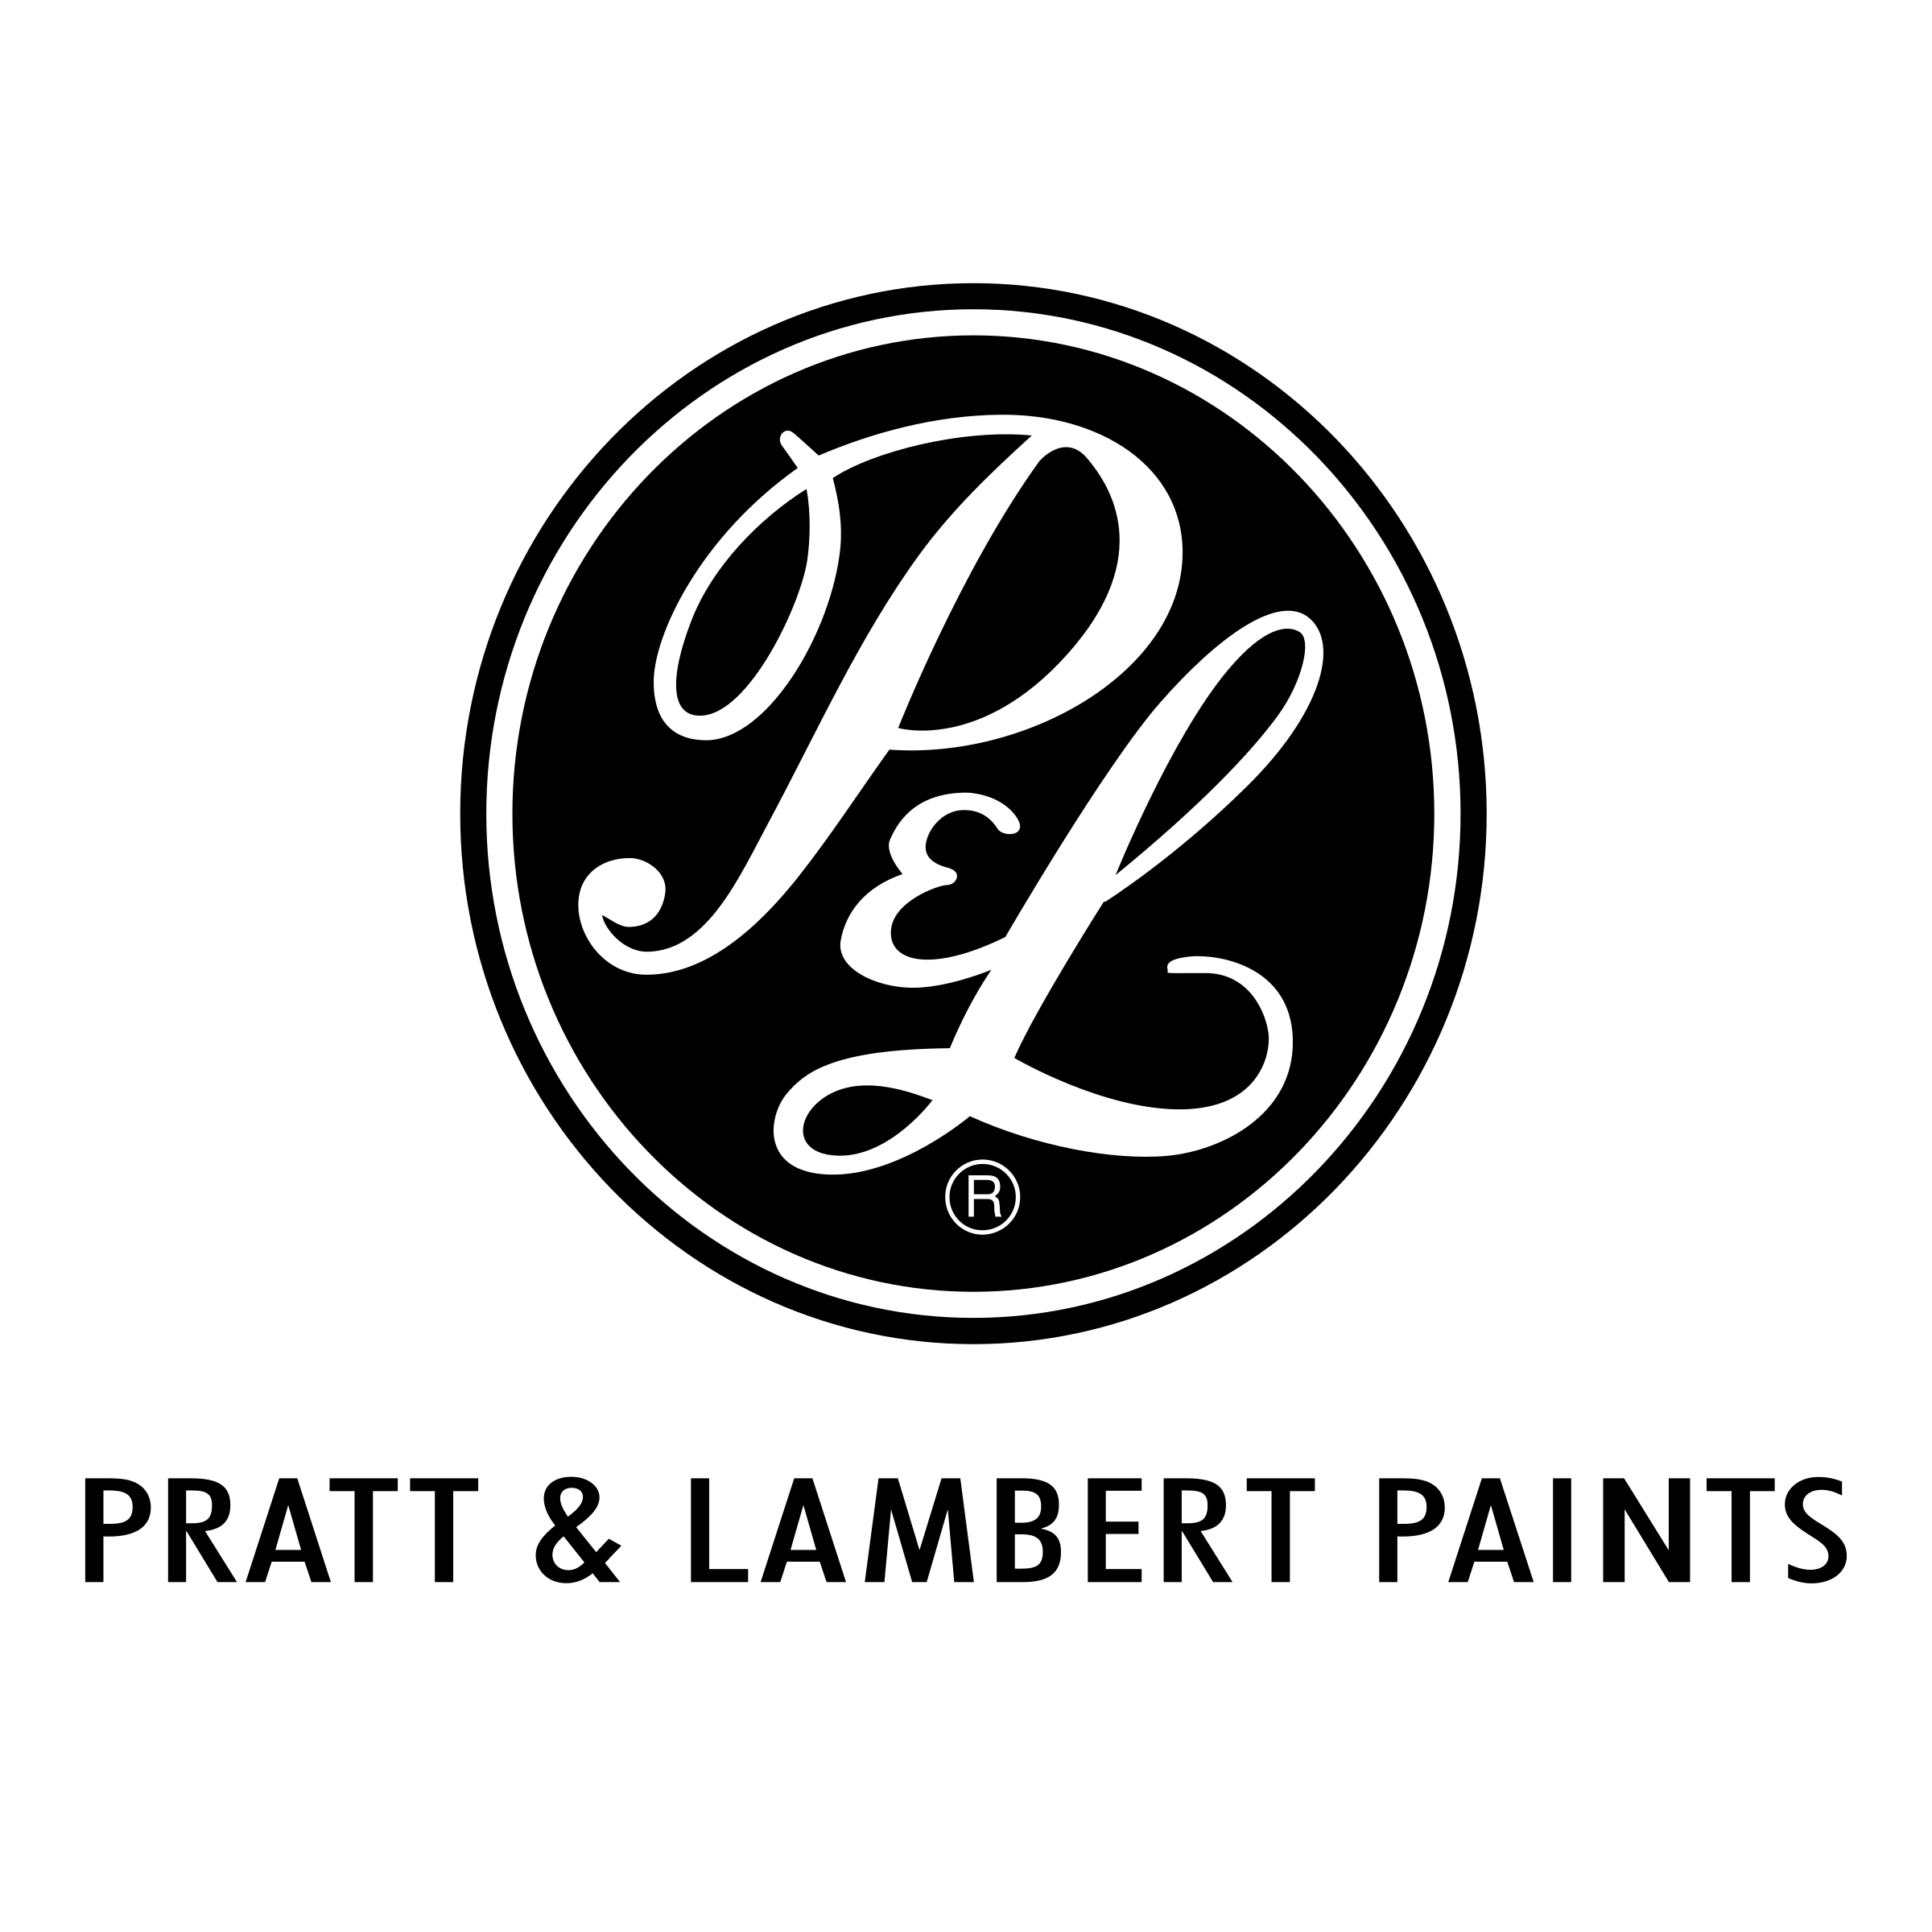 P&L Logo - P&L Logo PNG Transparent & SVG Vector - Freebie Supply